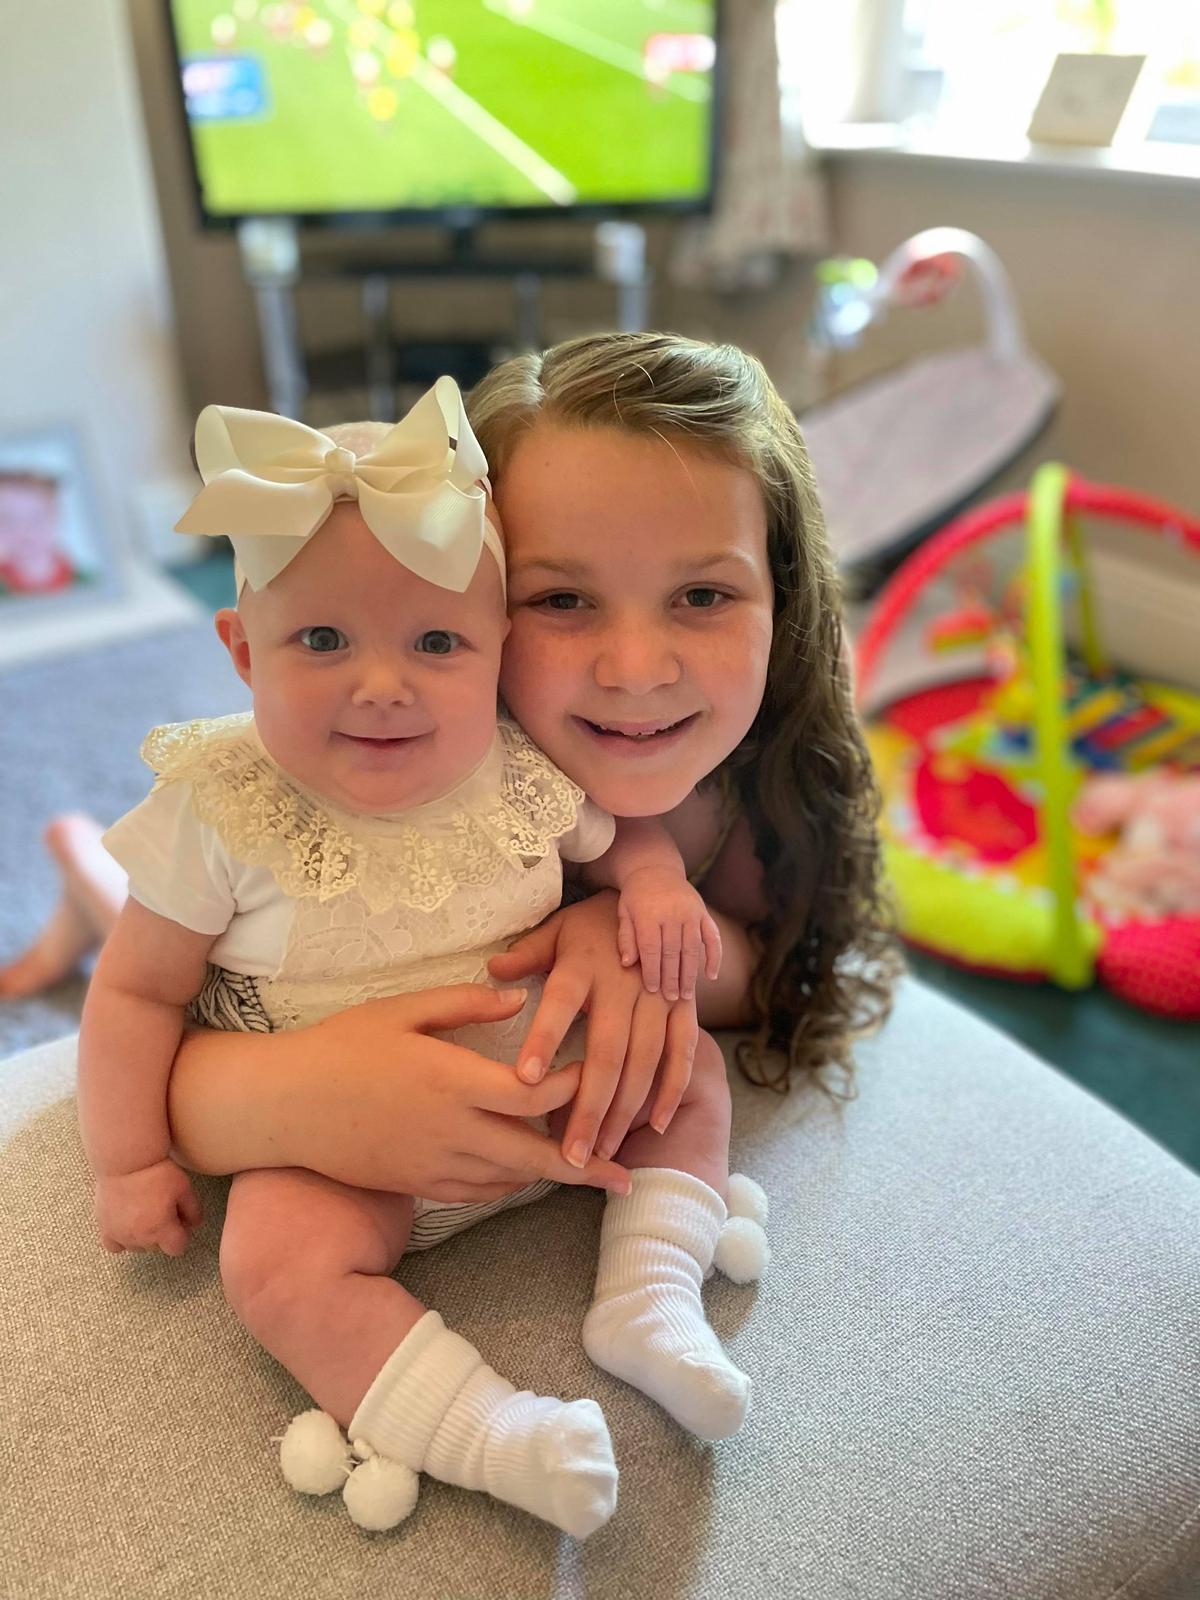 Baby Arabella with her older sister, Scarlett. (Courtesy of <a href="https://www.facebook.com/elbrierley">Emily Brierley</a>)